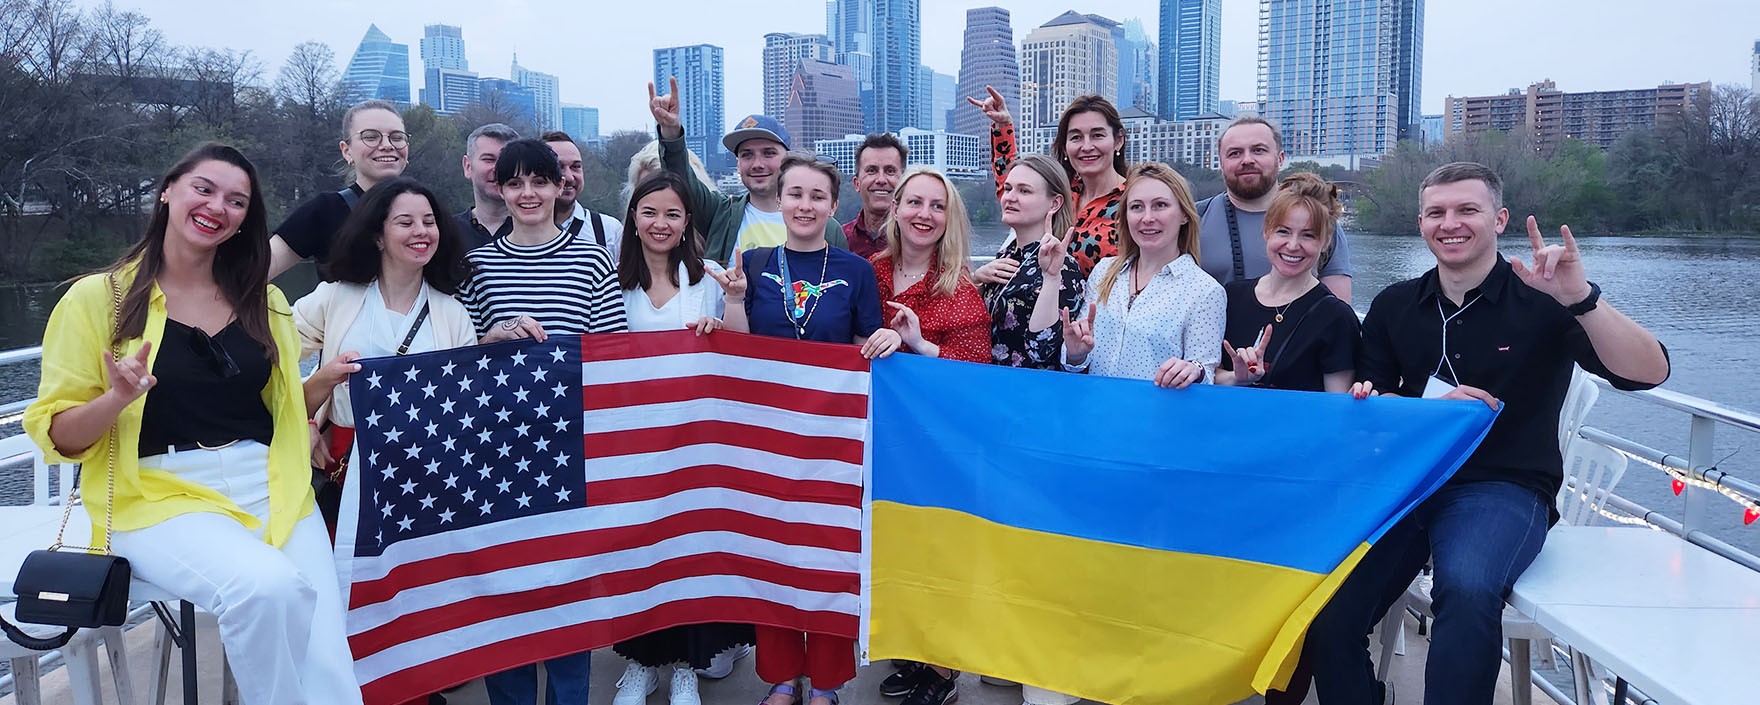 Ukrainian Business Leaders cohort posing with Austin skyline in background